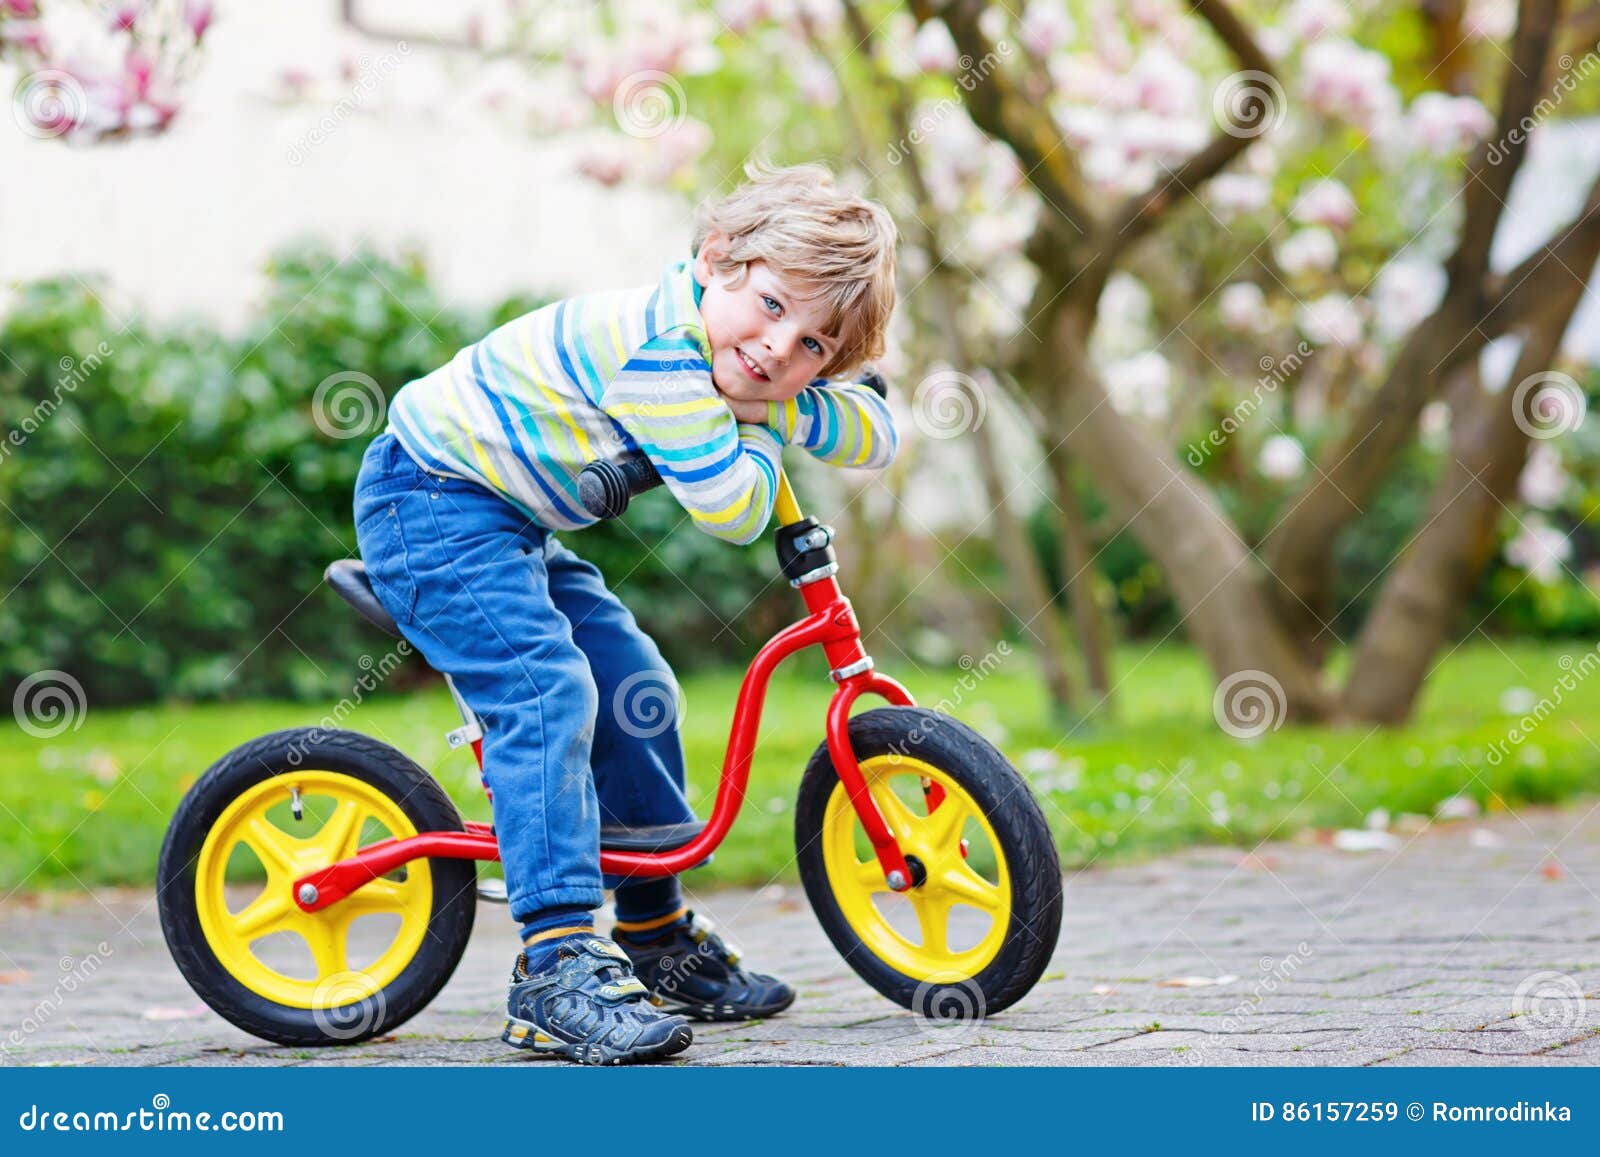 kids driving bike